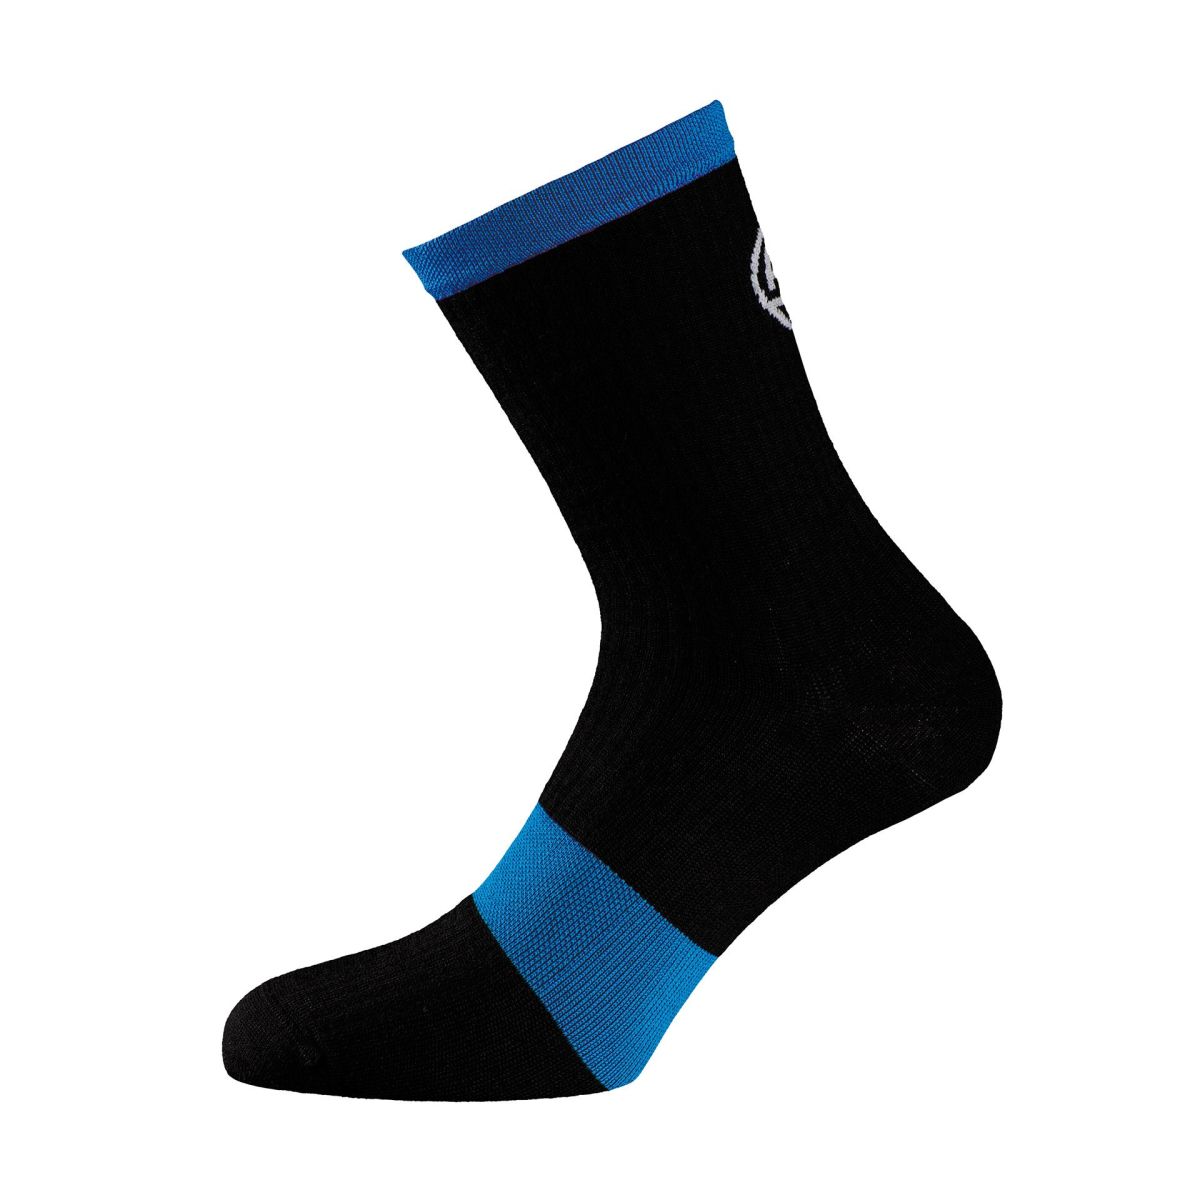 BL Traccia Winter Socks - Socks - Cycle SuperStore